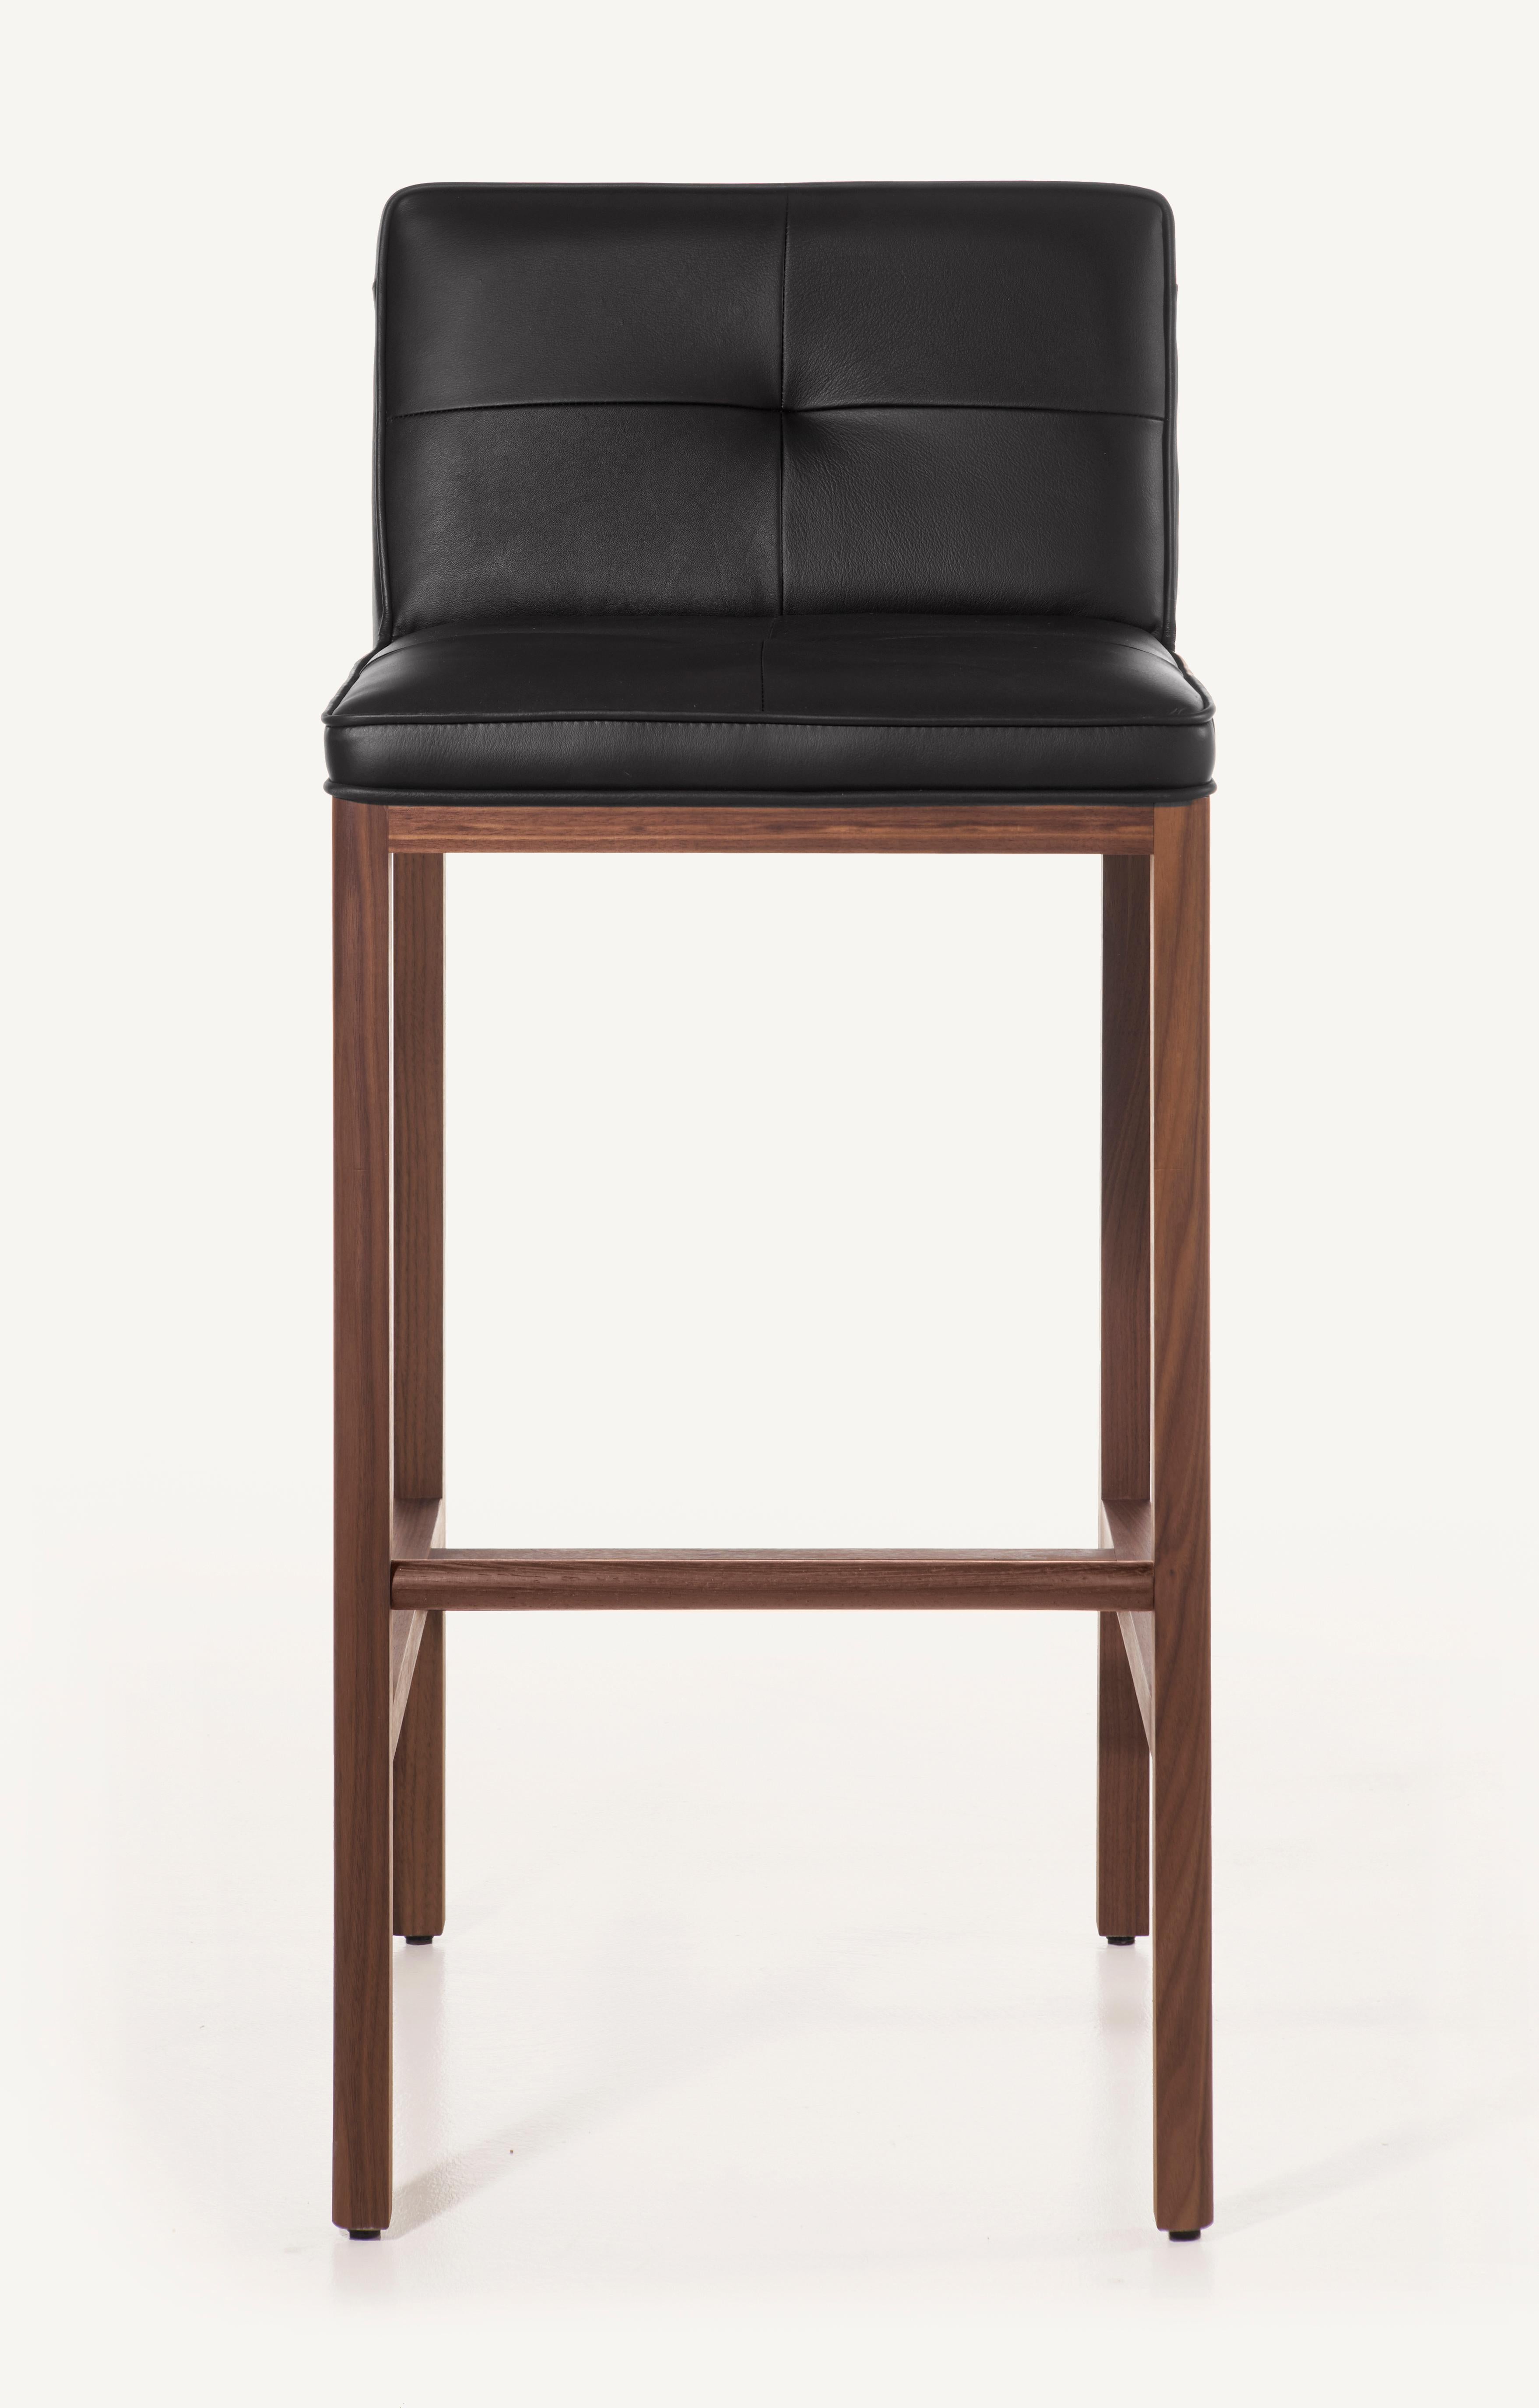 For Sale: Black (Comfort 99991 Black) Wood Frame Bar Stool in Walnut and Leather Designed by Craig Bassam 3